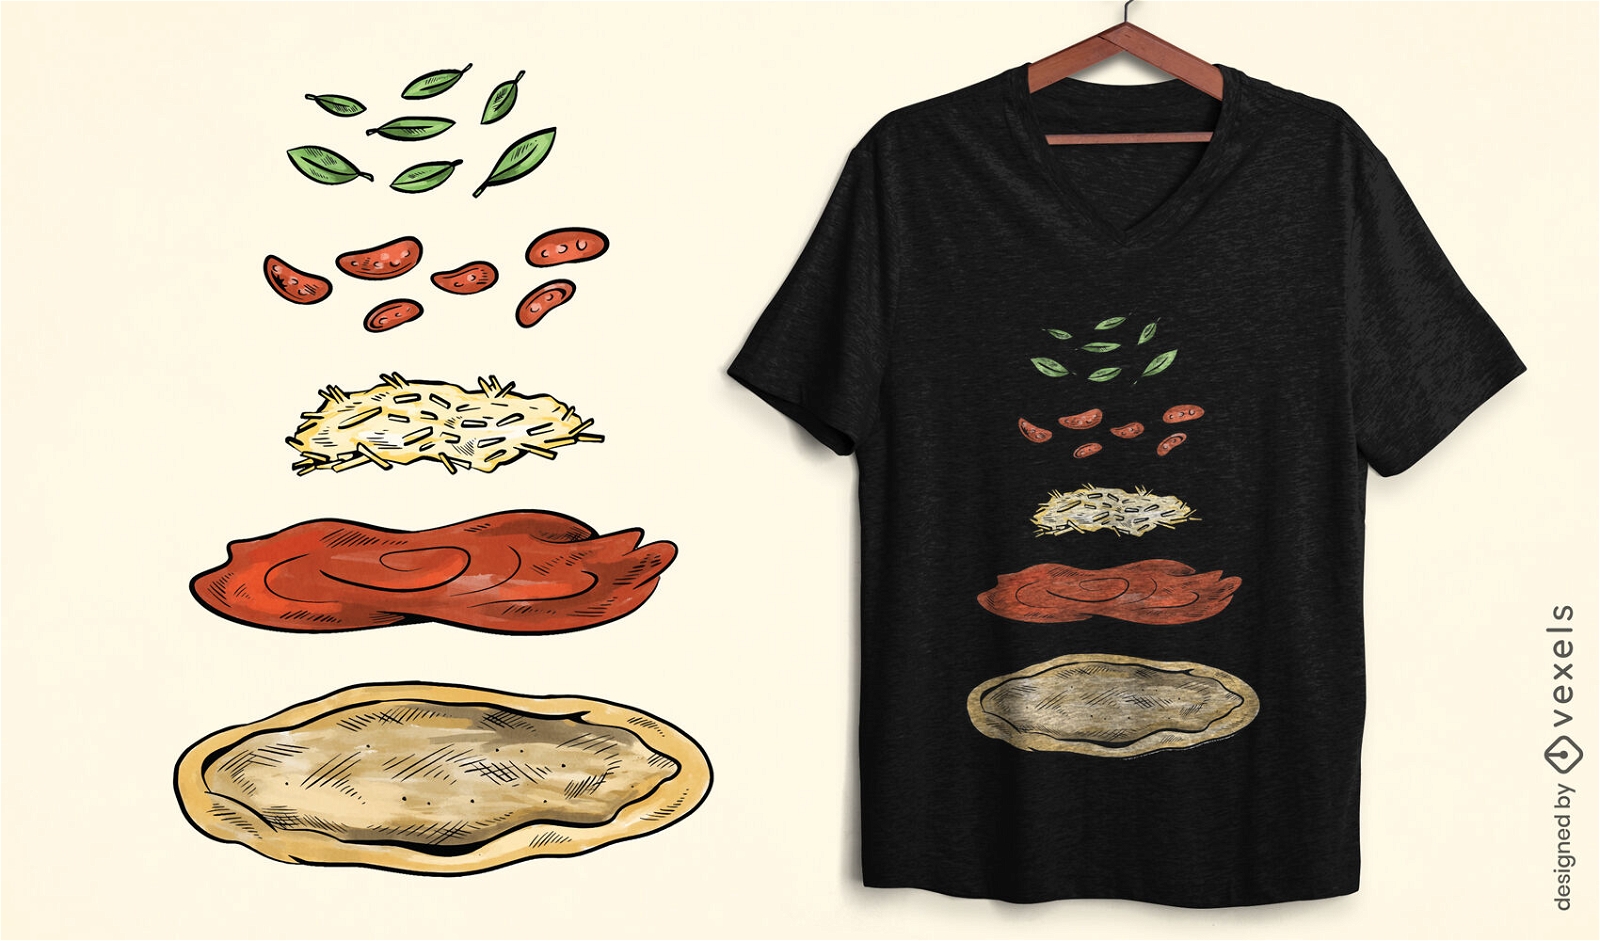 Dise?o de camiseta de ingredientes de pizza.